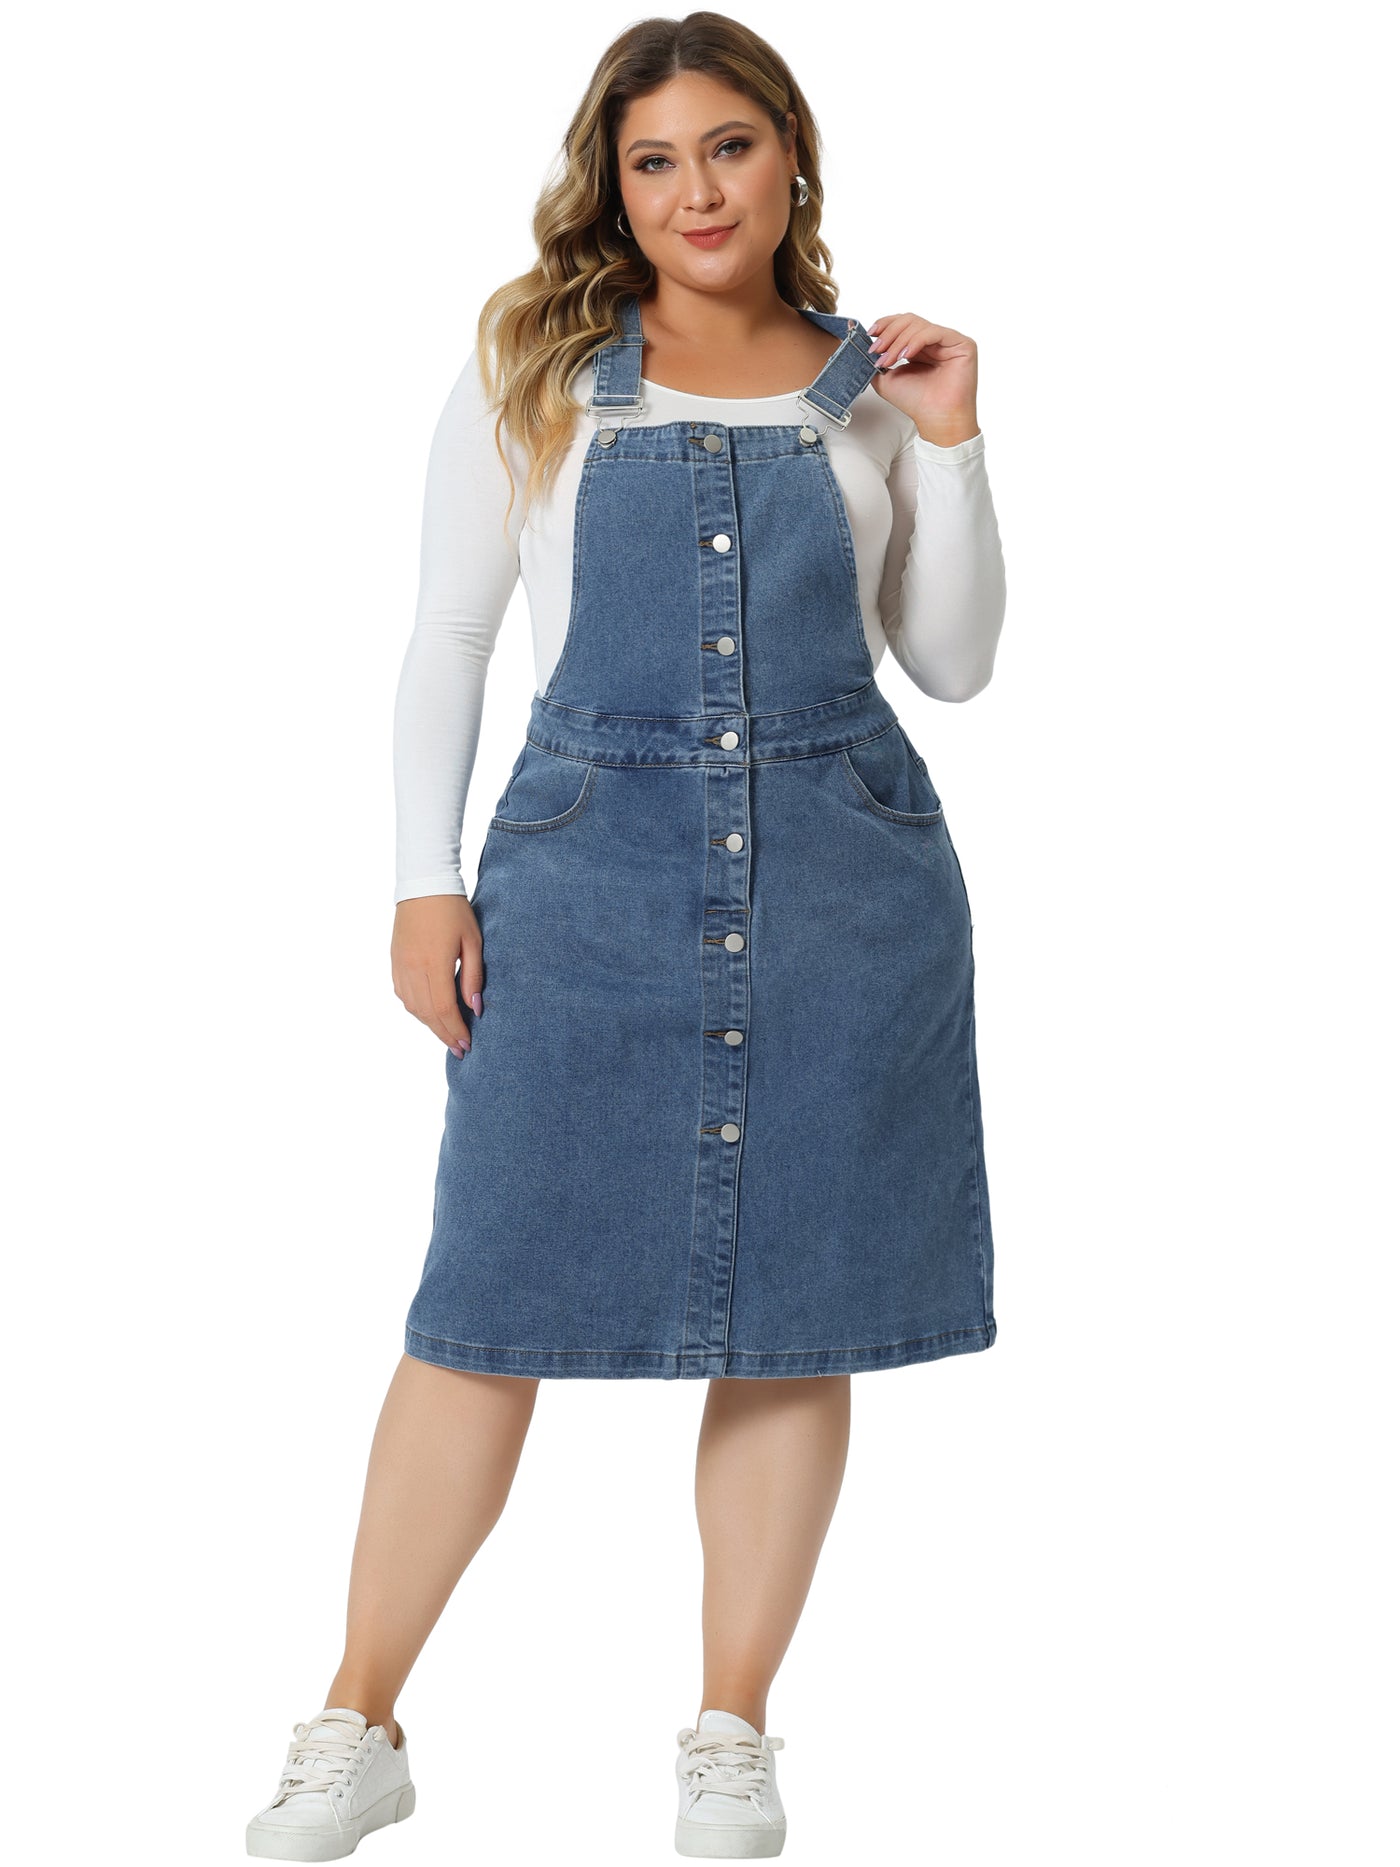 Bublédon Plus Size Denim Overall Dress for Women Button Front Adjustable Strap Suspender Jean Skirt